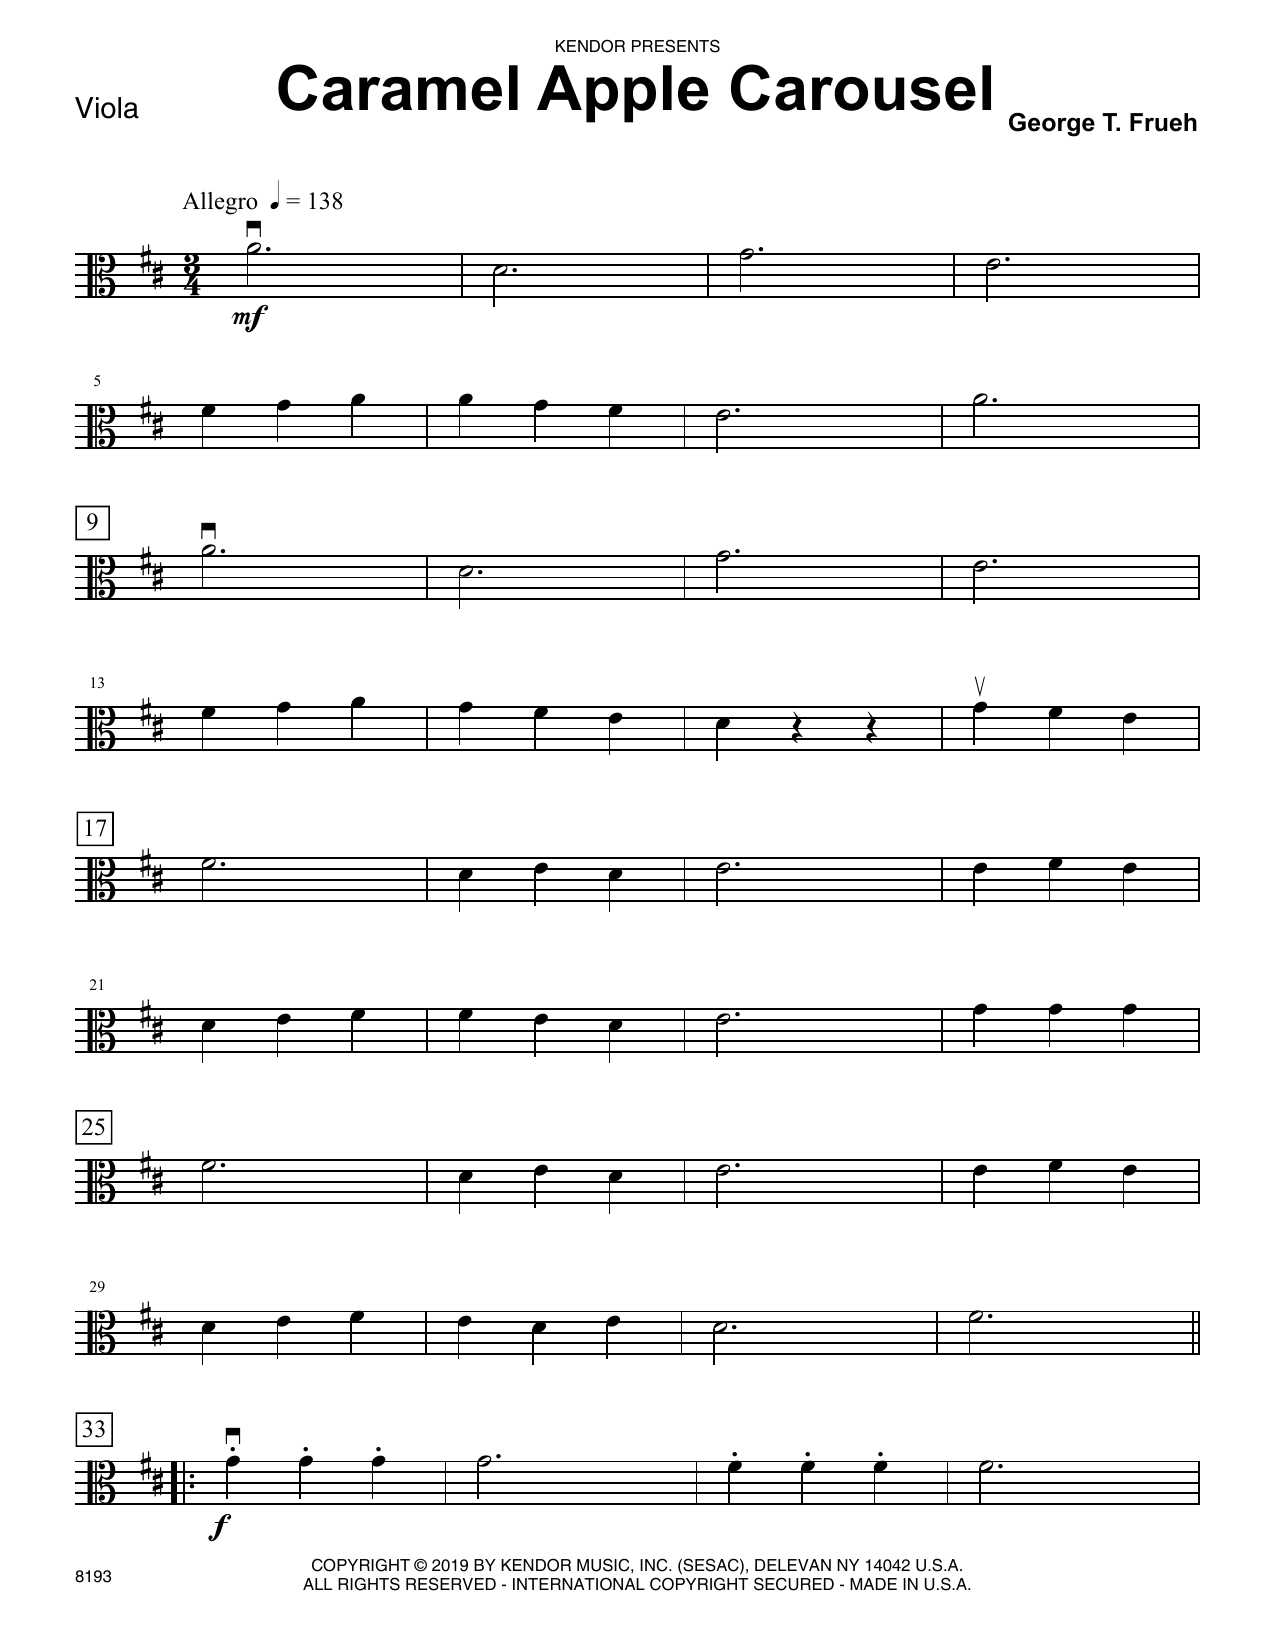 Download George T. Frueh Caramel Apple Carousel - Viola Sheet Music